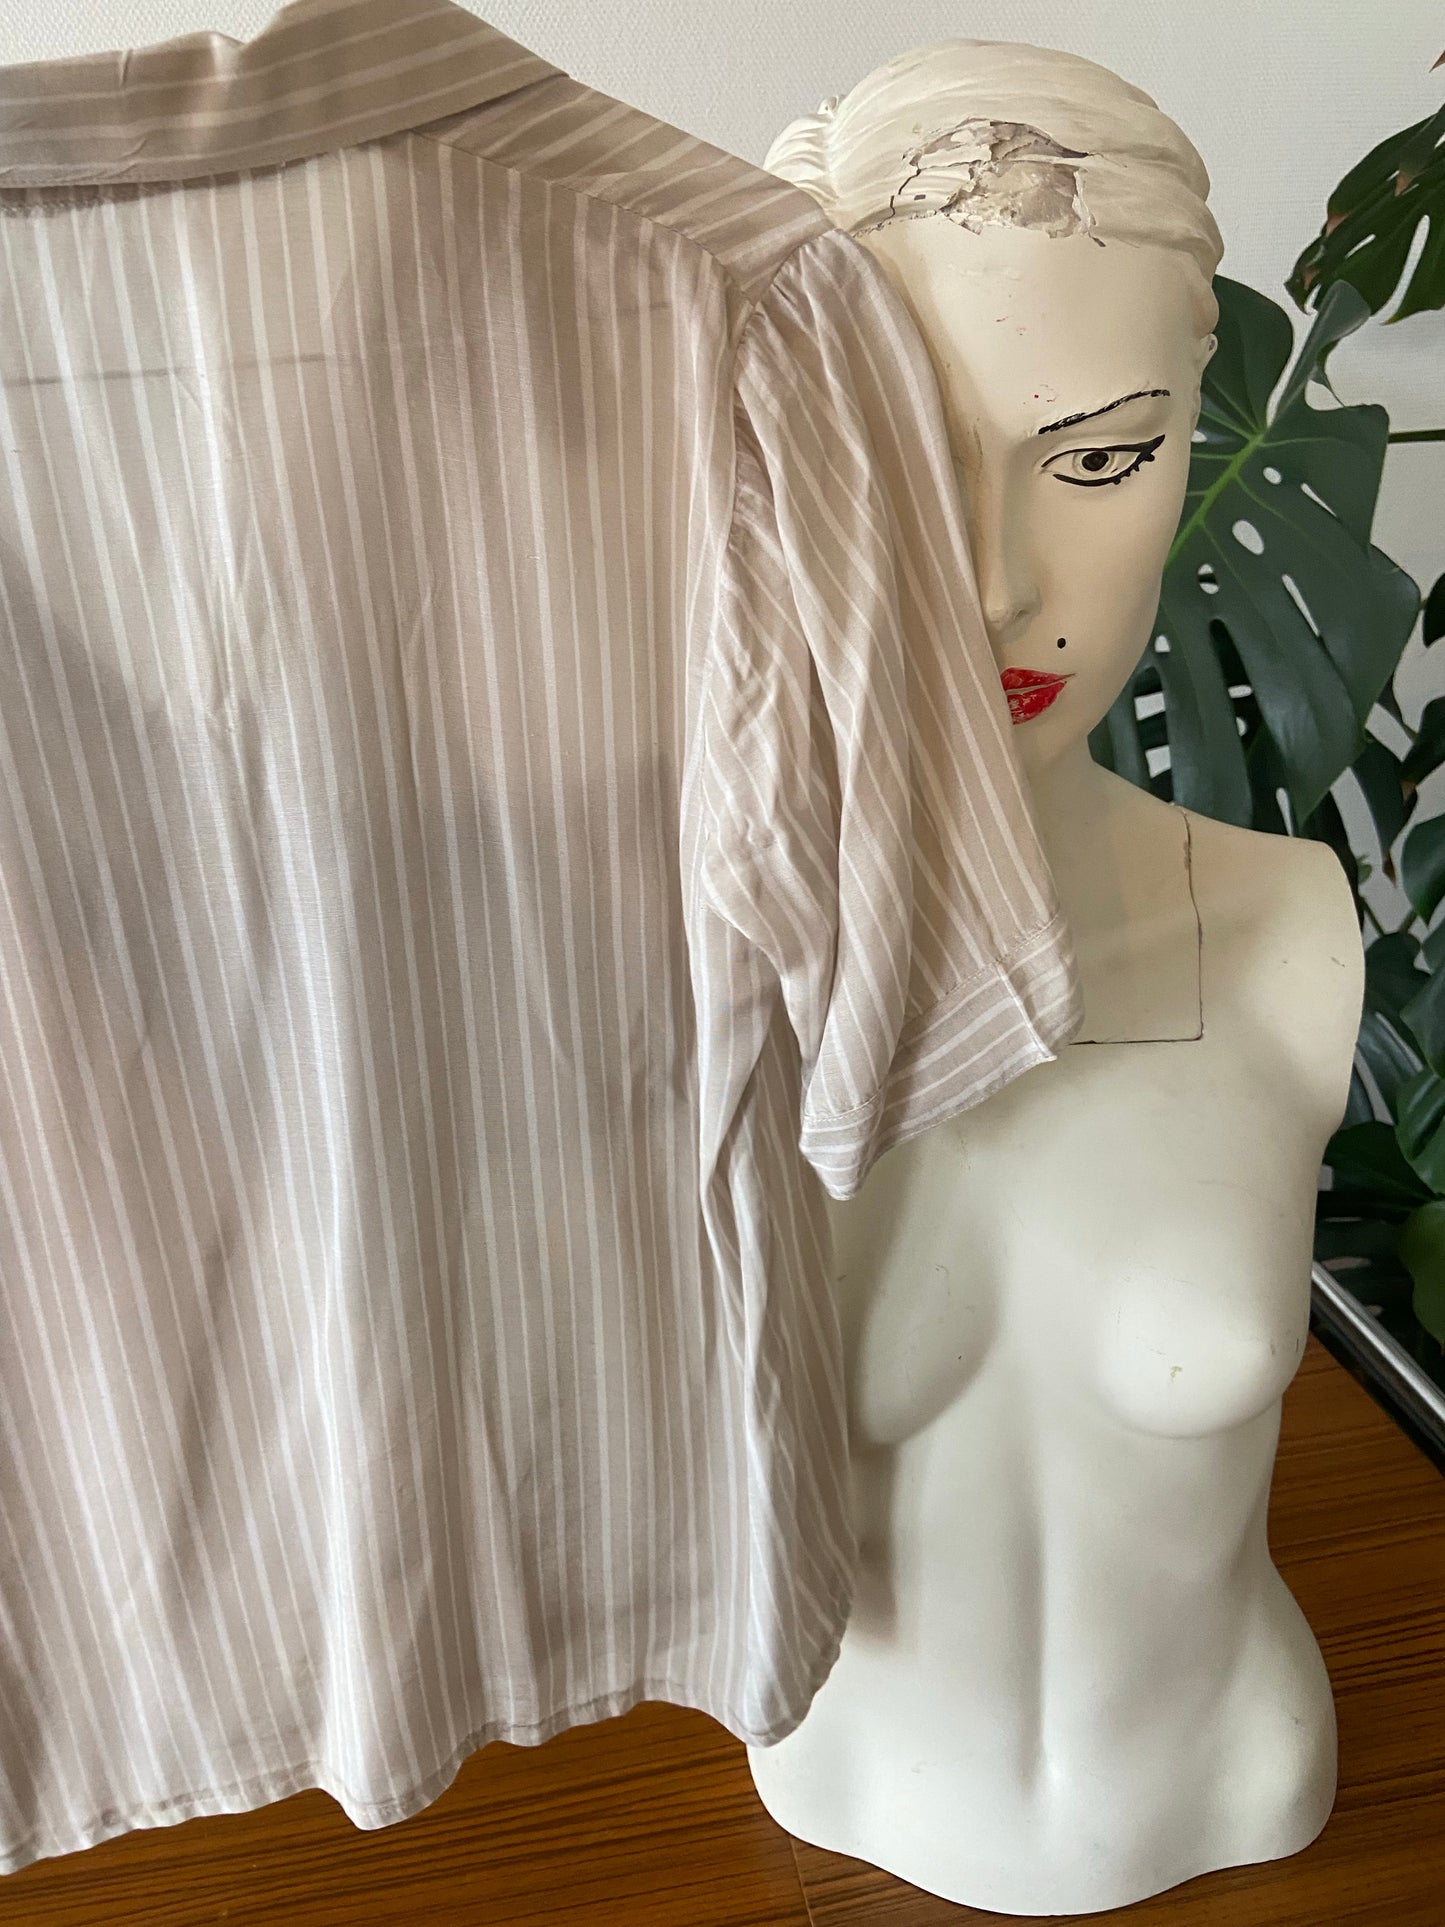 Striped silk shirt